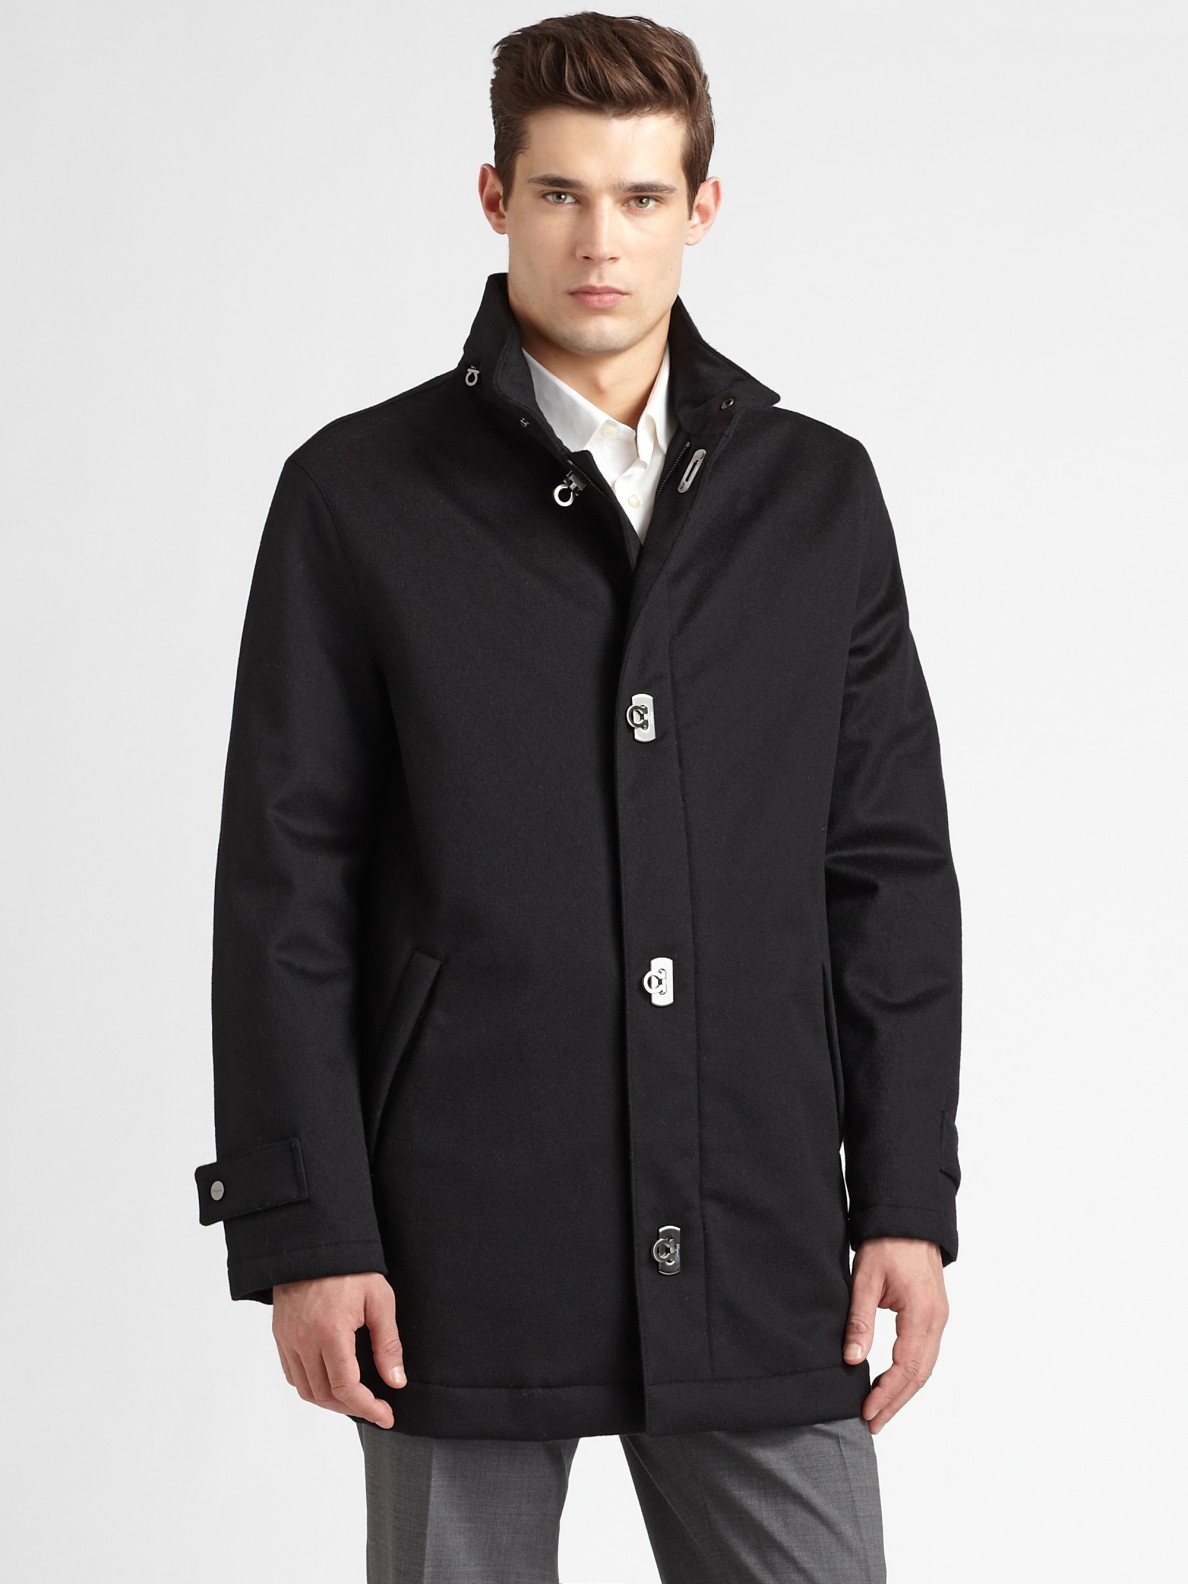 Ferragamo Wool/cashmere Car Coat in Black for Men | Lyst